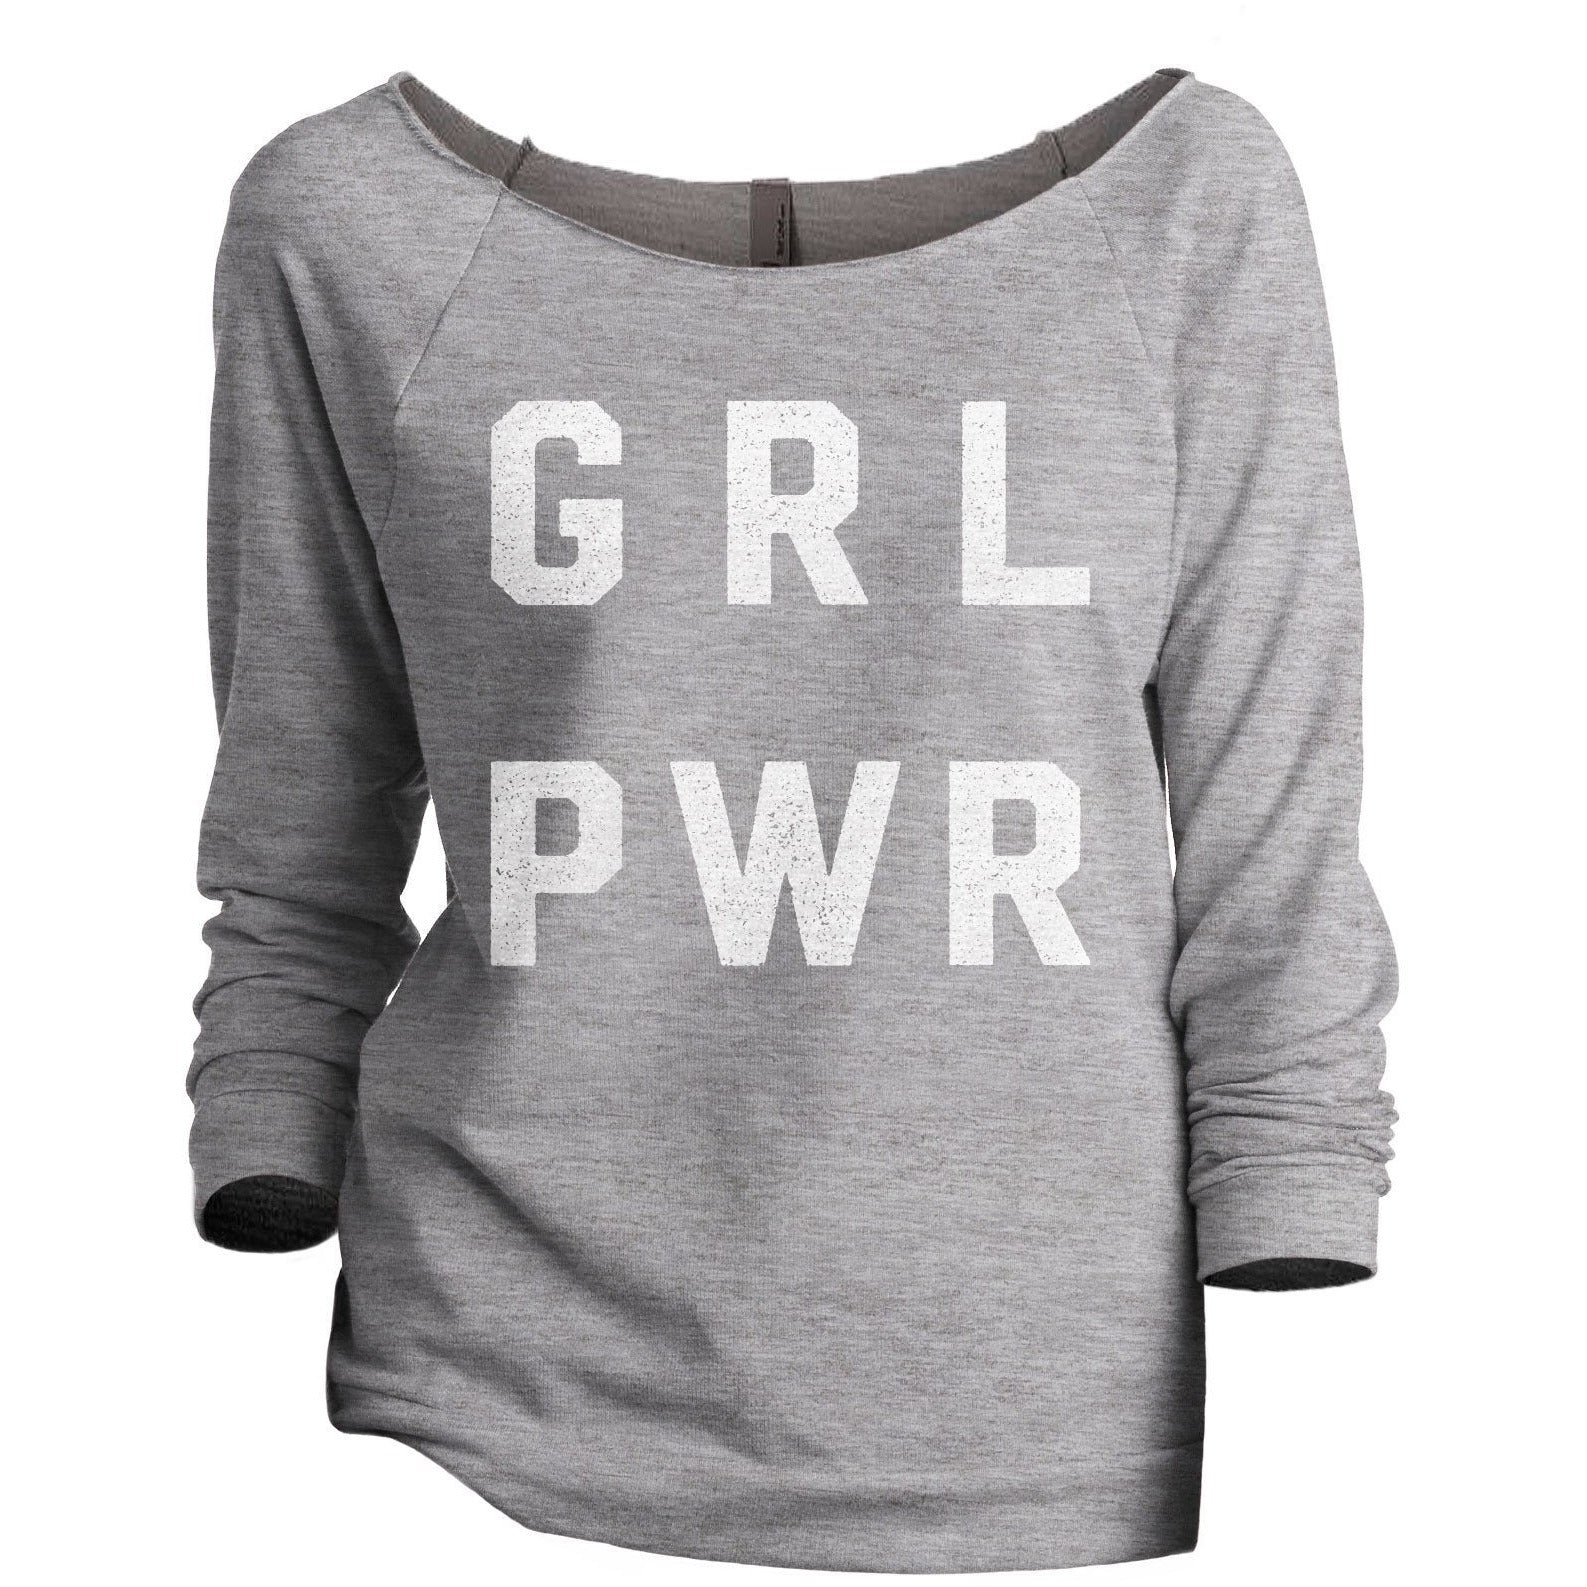 GRL PWR Girl Power Women's Graphic Printed Lightweight Slouchy 3/4 Sleeves Sweatshirt Sport Grey